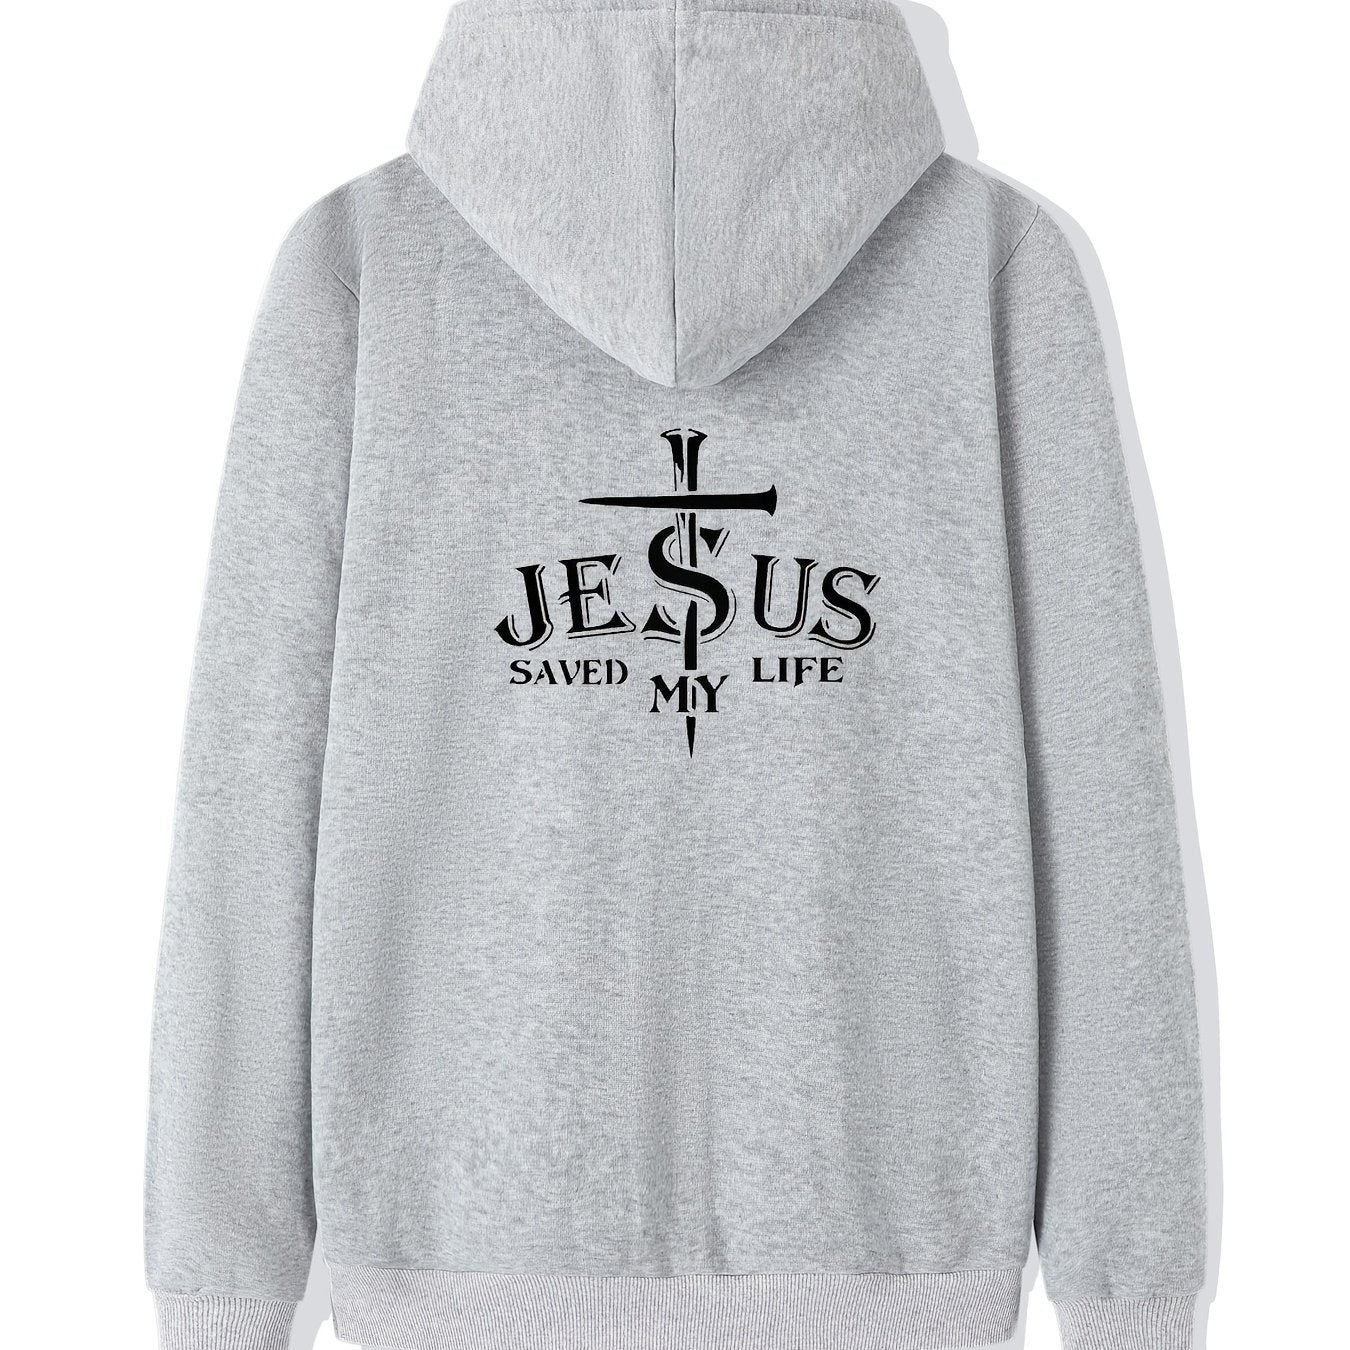 ''JESUS SAVED MY LIFE'' Cross Print Men's Zip-Up Fleece Hooded Jacket, Casual Loose Hoodie For Sports, Running claimedbygoddesigns